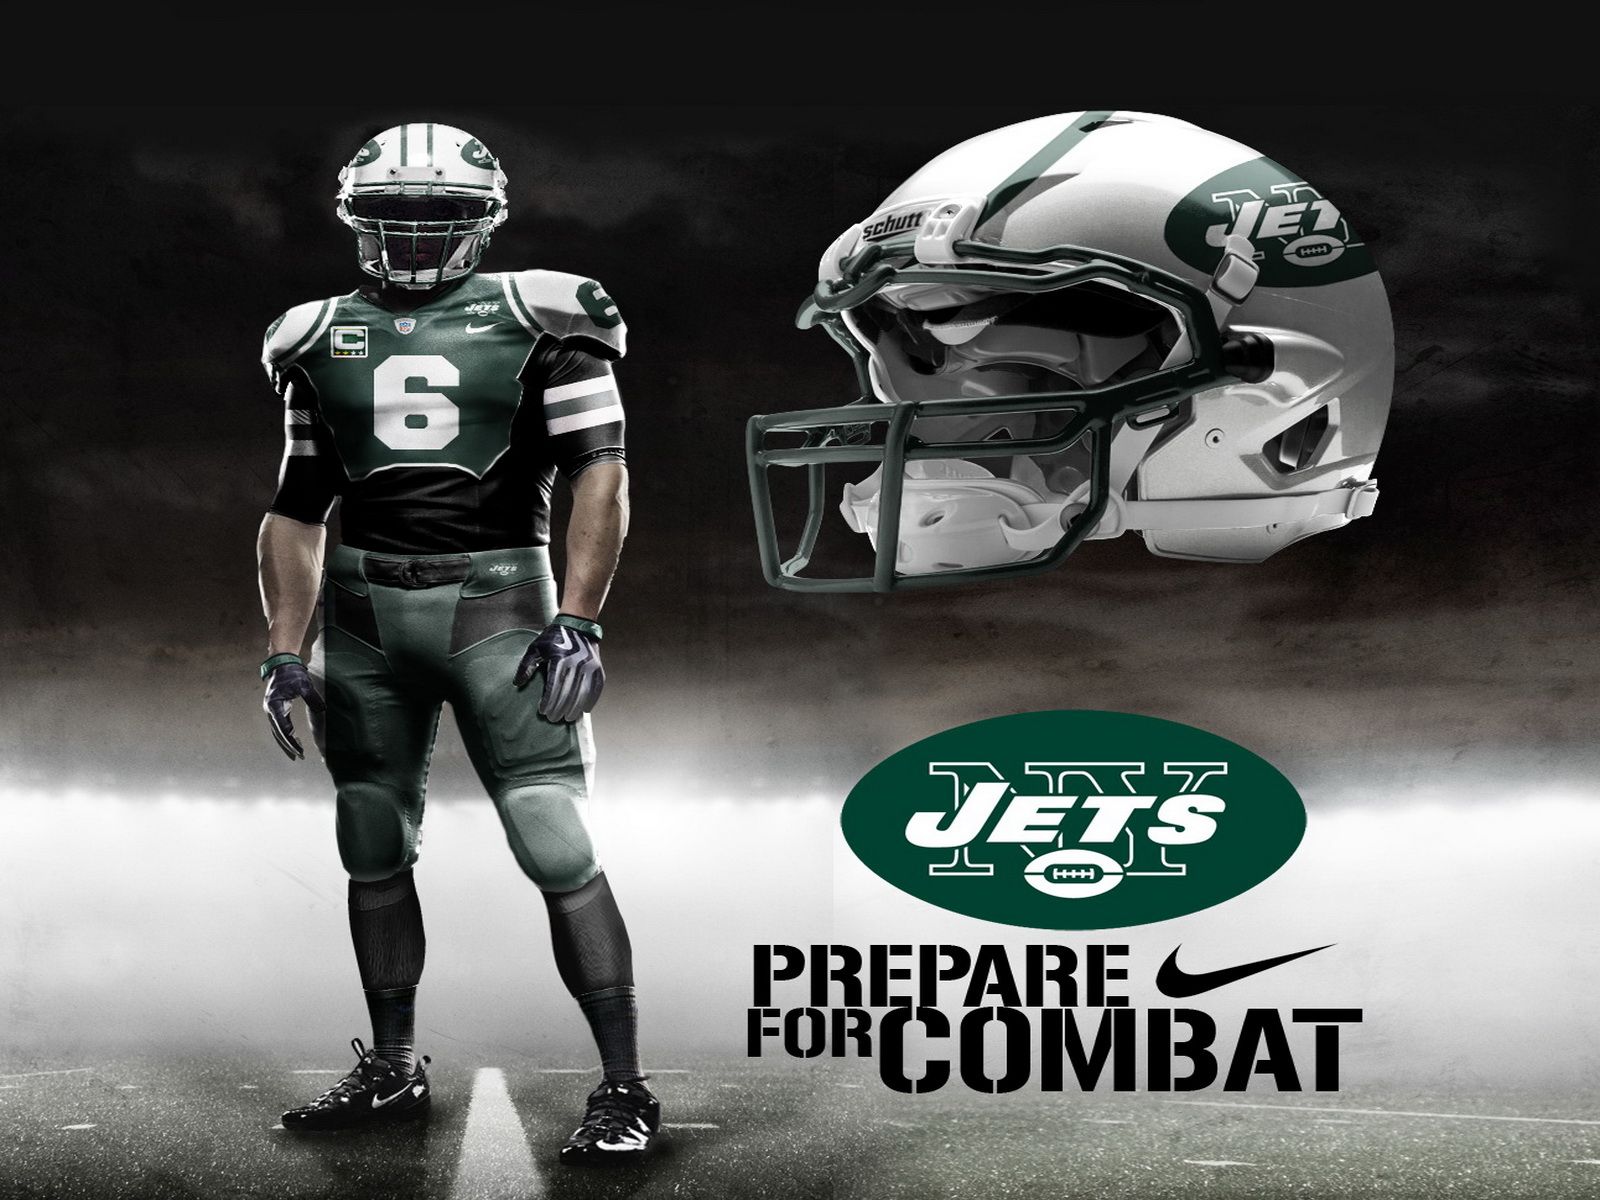 Wallpaperres.com | New York Jets American Football Team Wallpaper 05